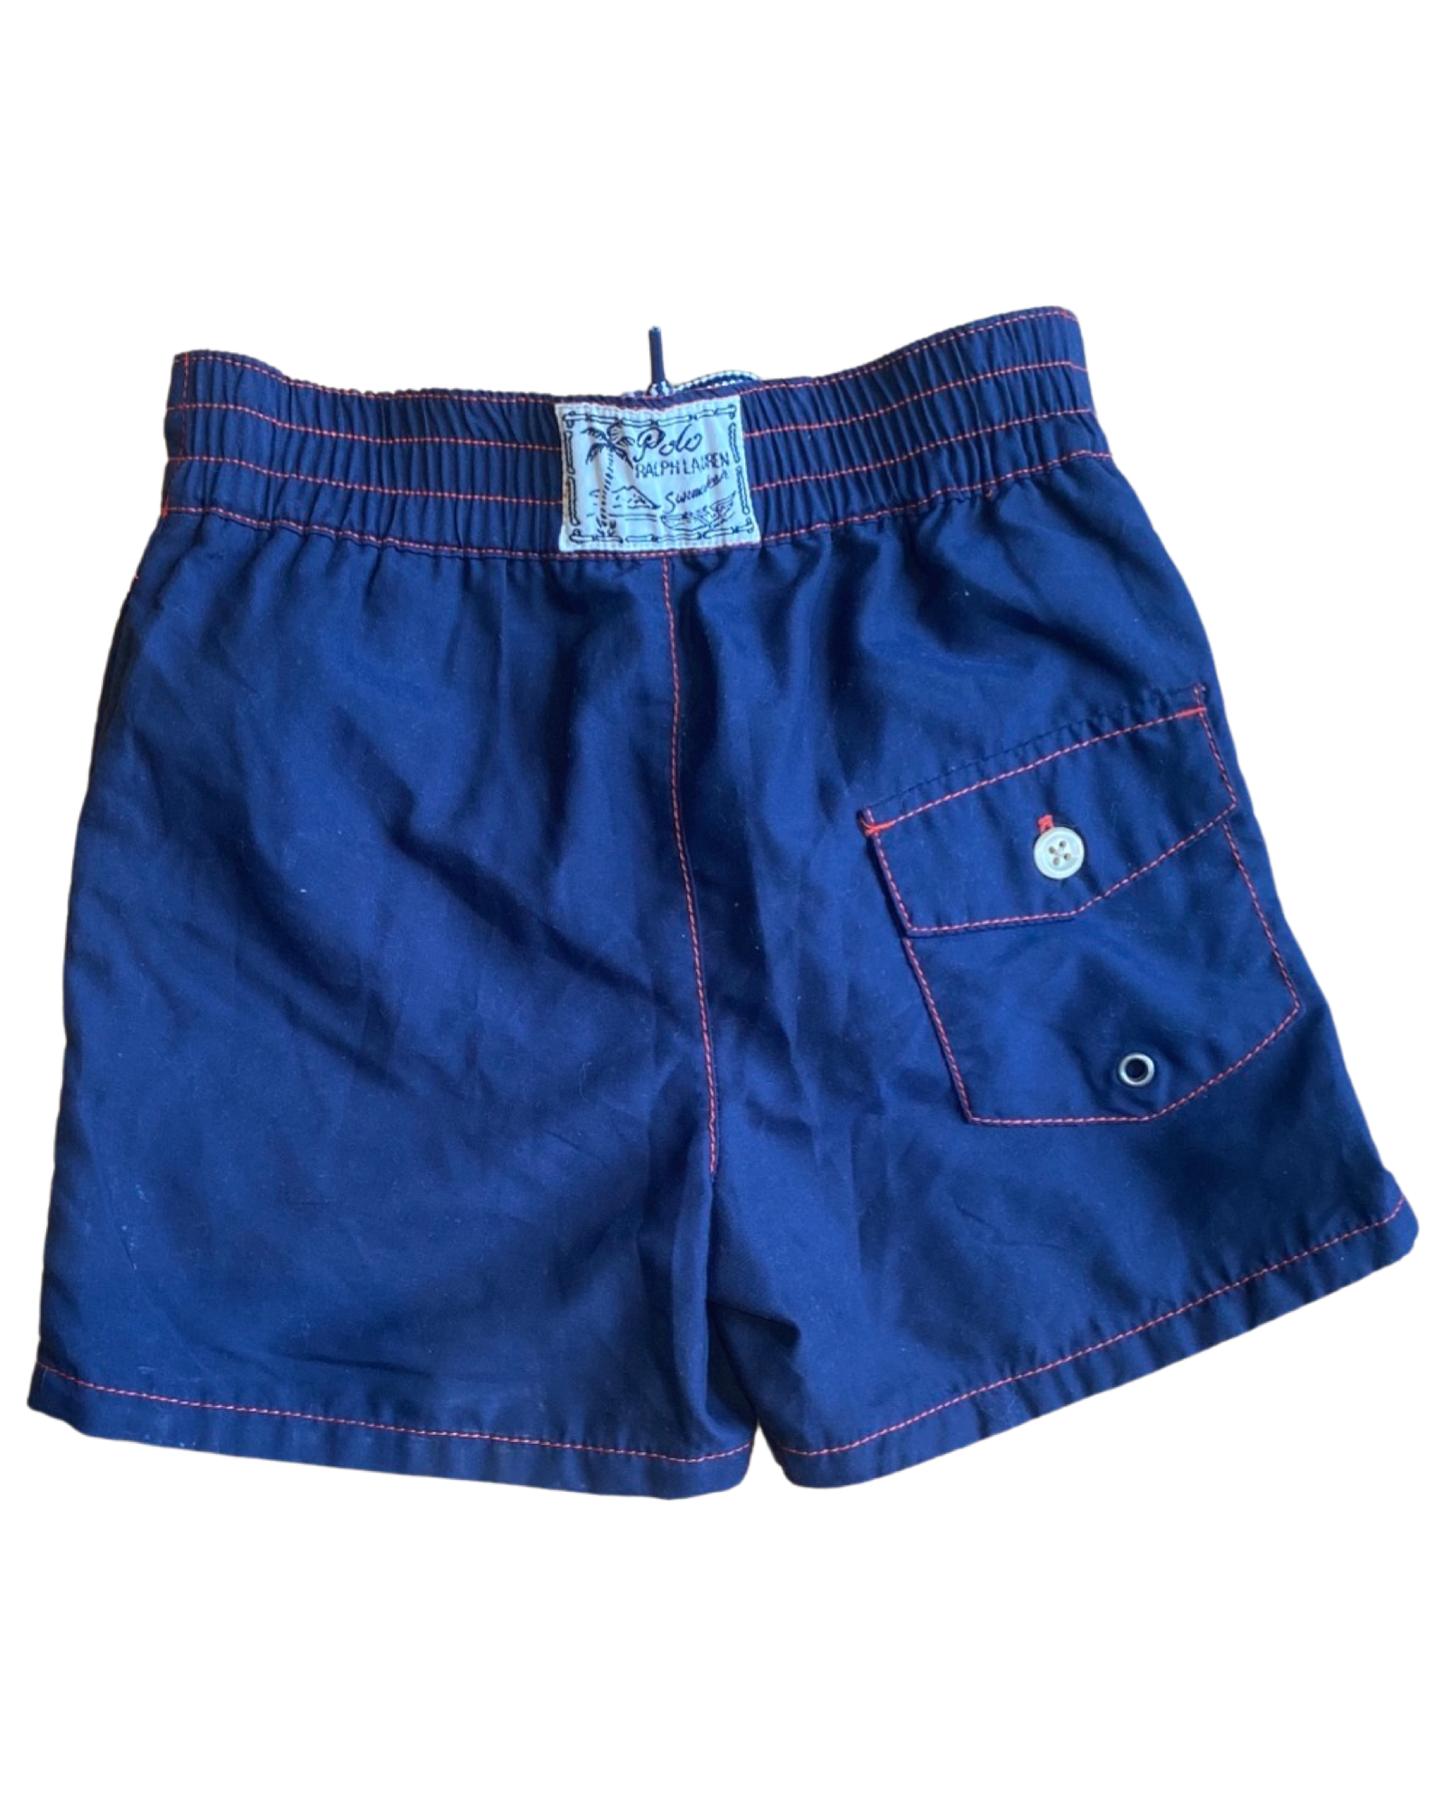 Ralph Lauren Polo navy swim shorts (size 18mths)